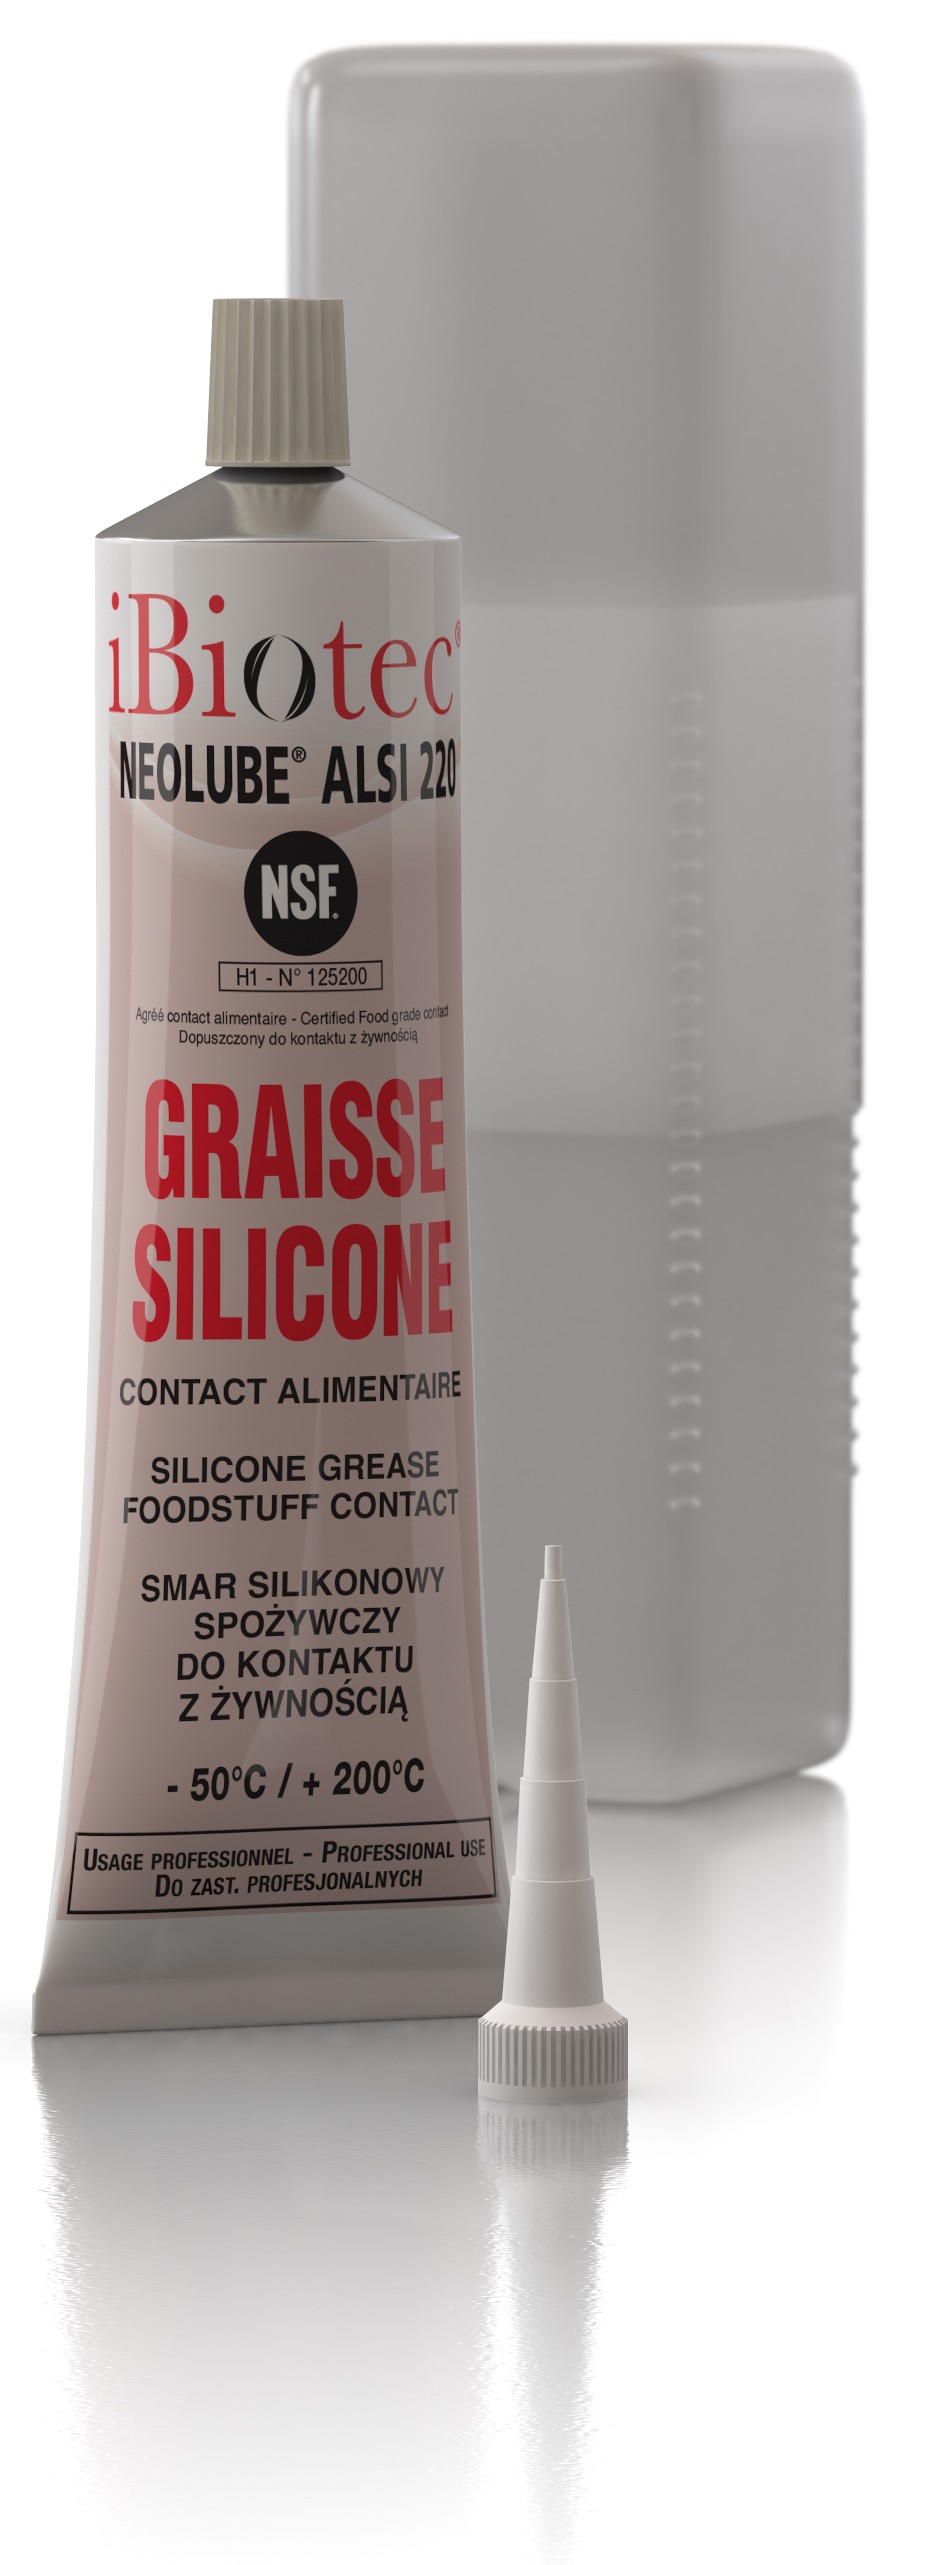 Graisse silicone - NEOLUBE® ALSI 220 - Ibiotec - Global Industry